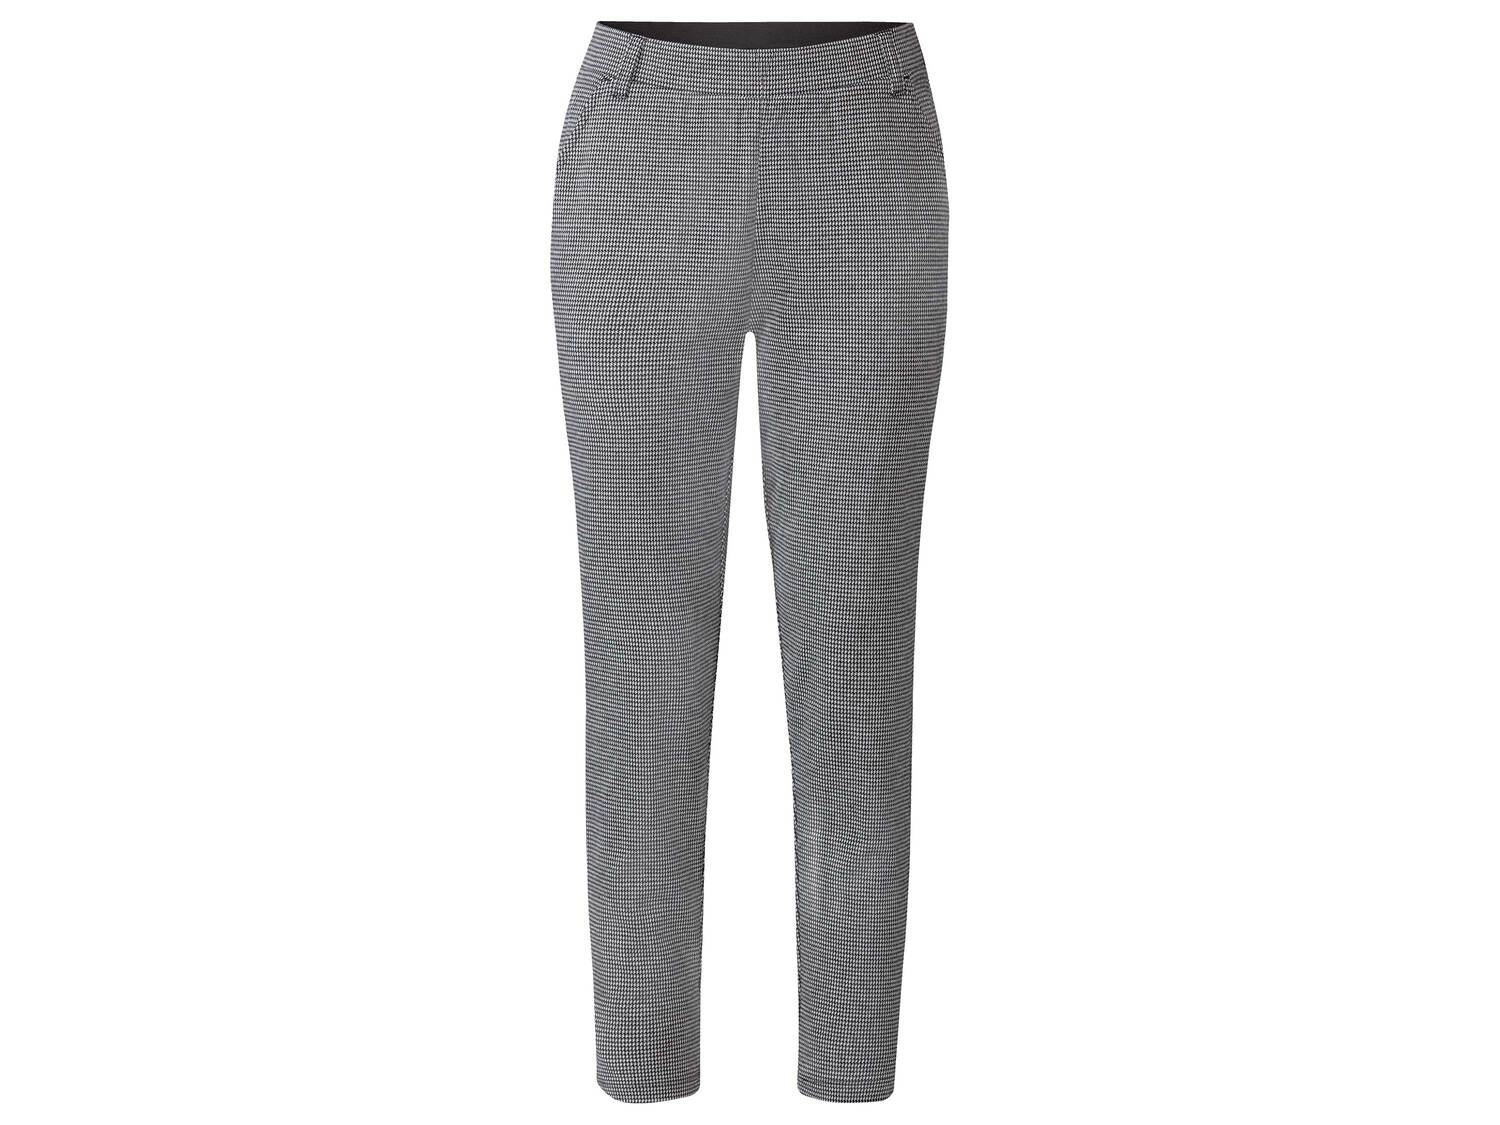 Pantalon , le prix 8.99 € 
- Du S au XL selon modèle
- Ex. 86 % polyester, ...